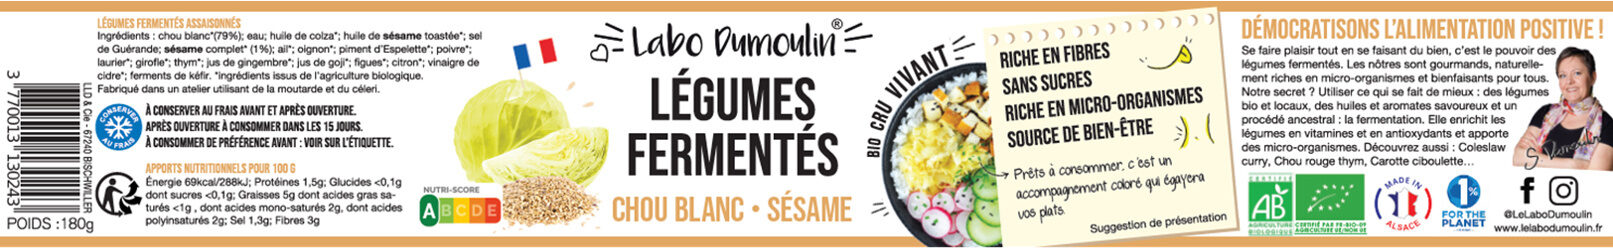 Légumes fermentés Chou blanc - Sésame - Ingrediënten - fr